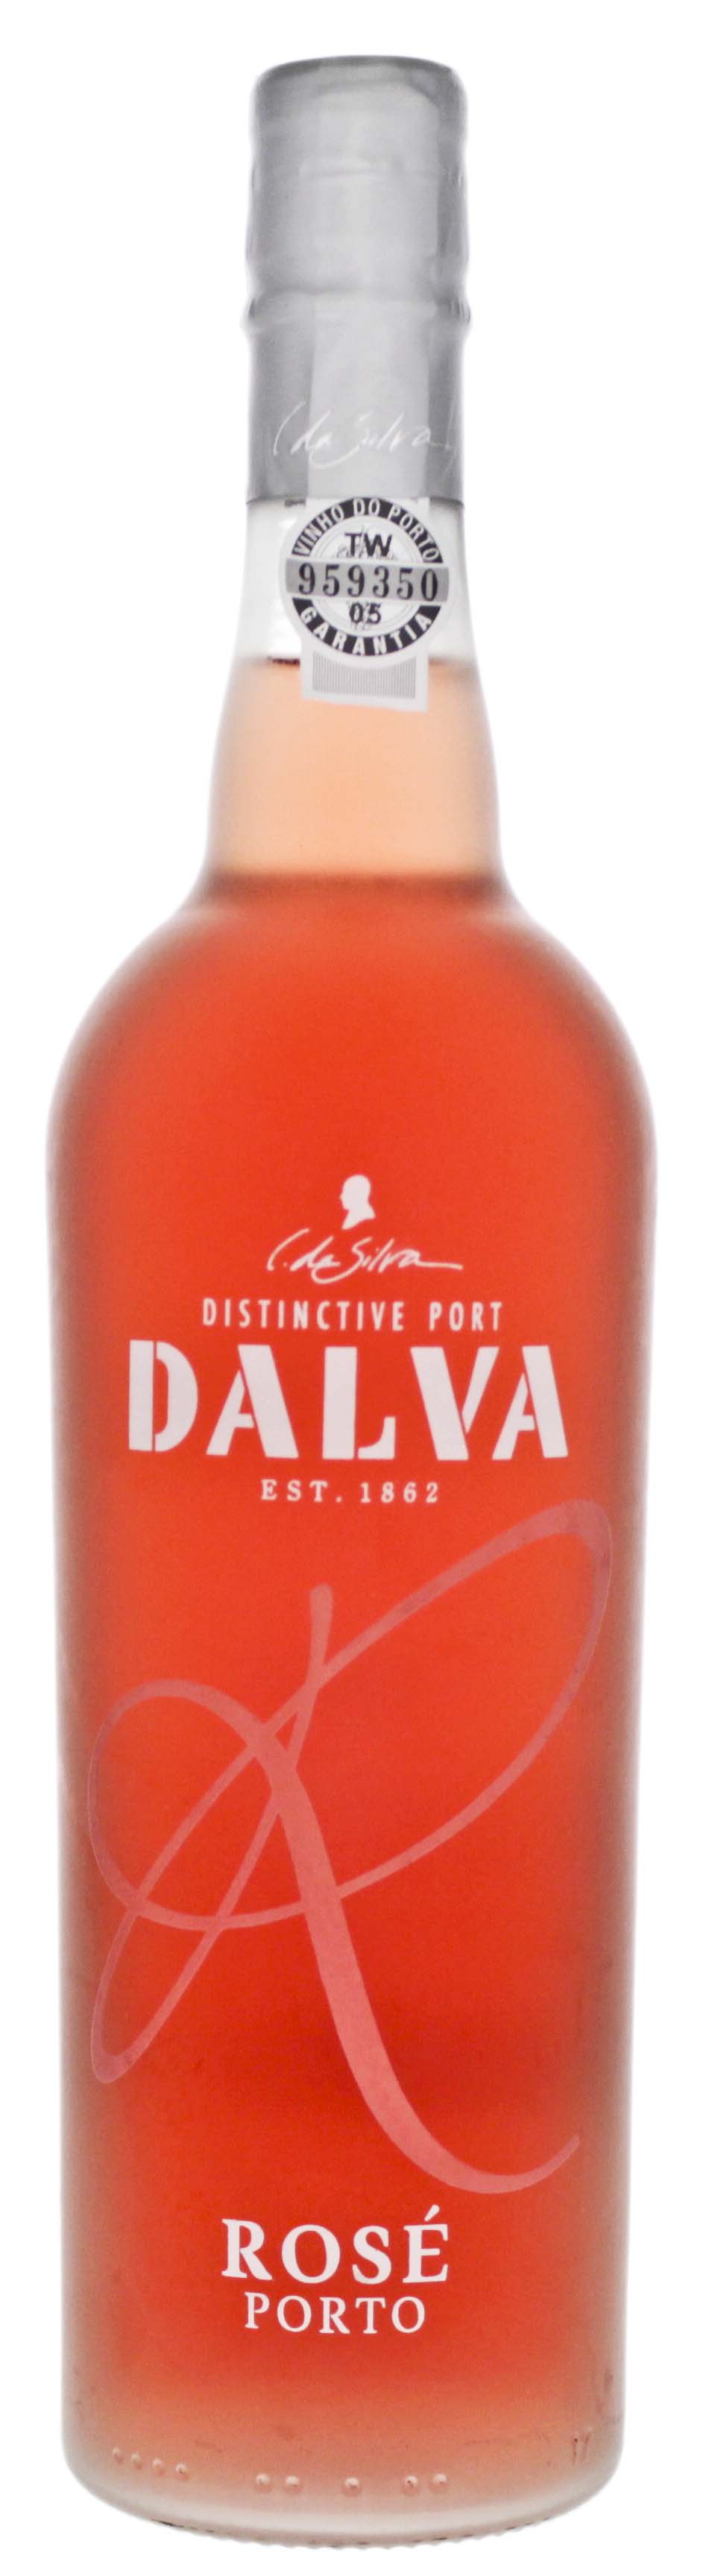 Dalva Rose Port 0,75L